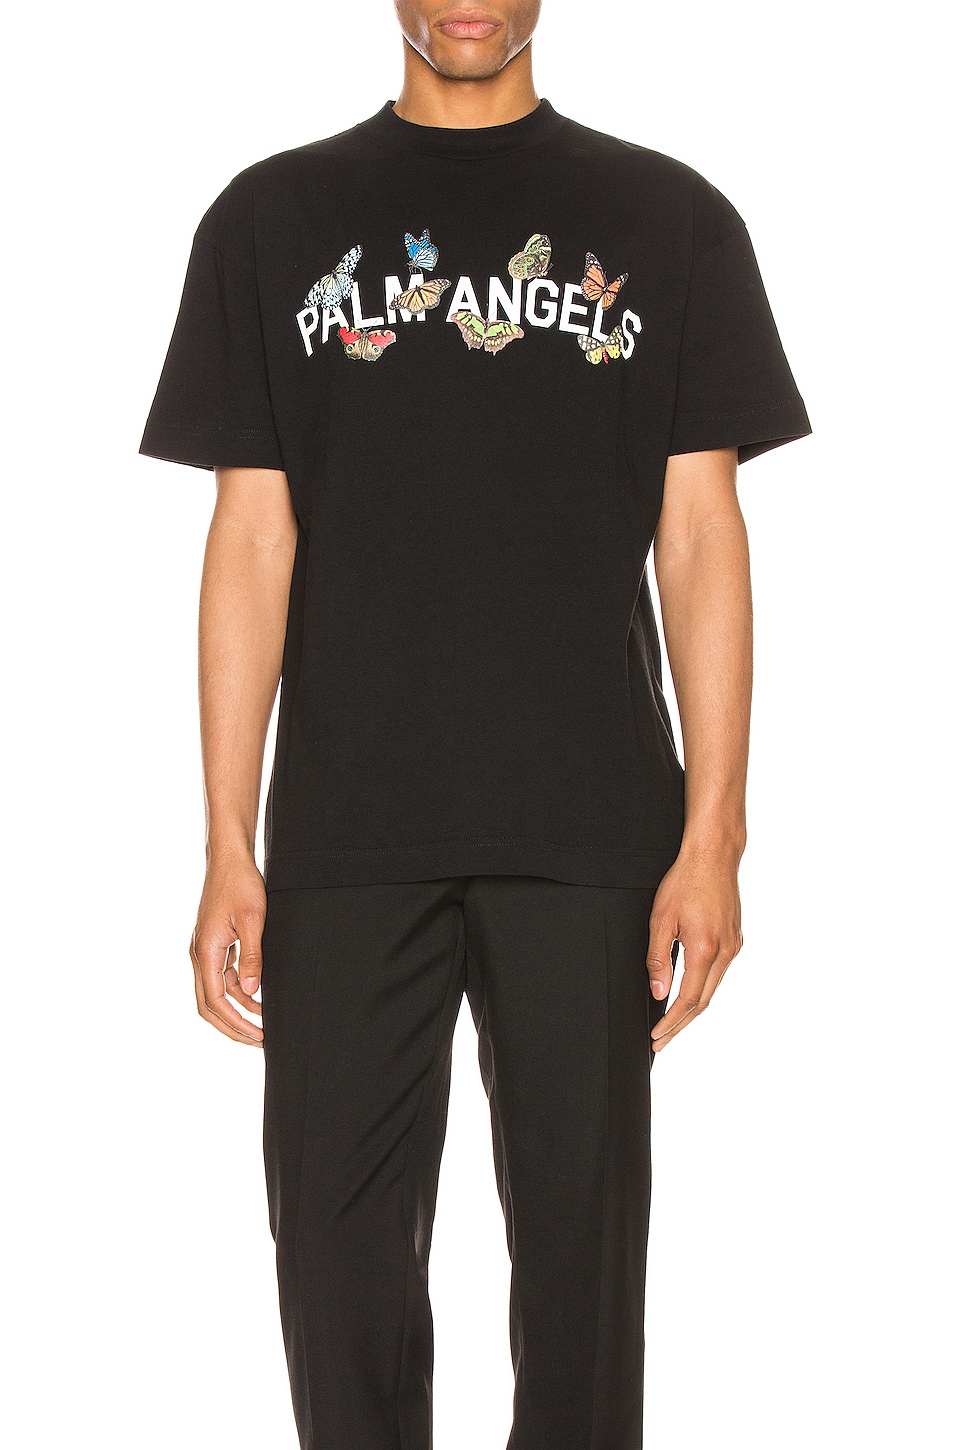 palm angels college t shirt